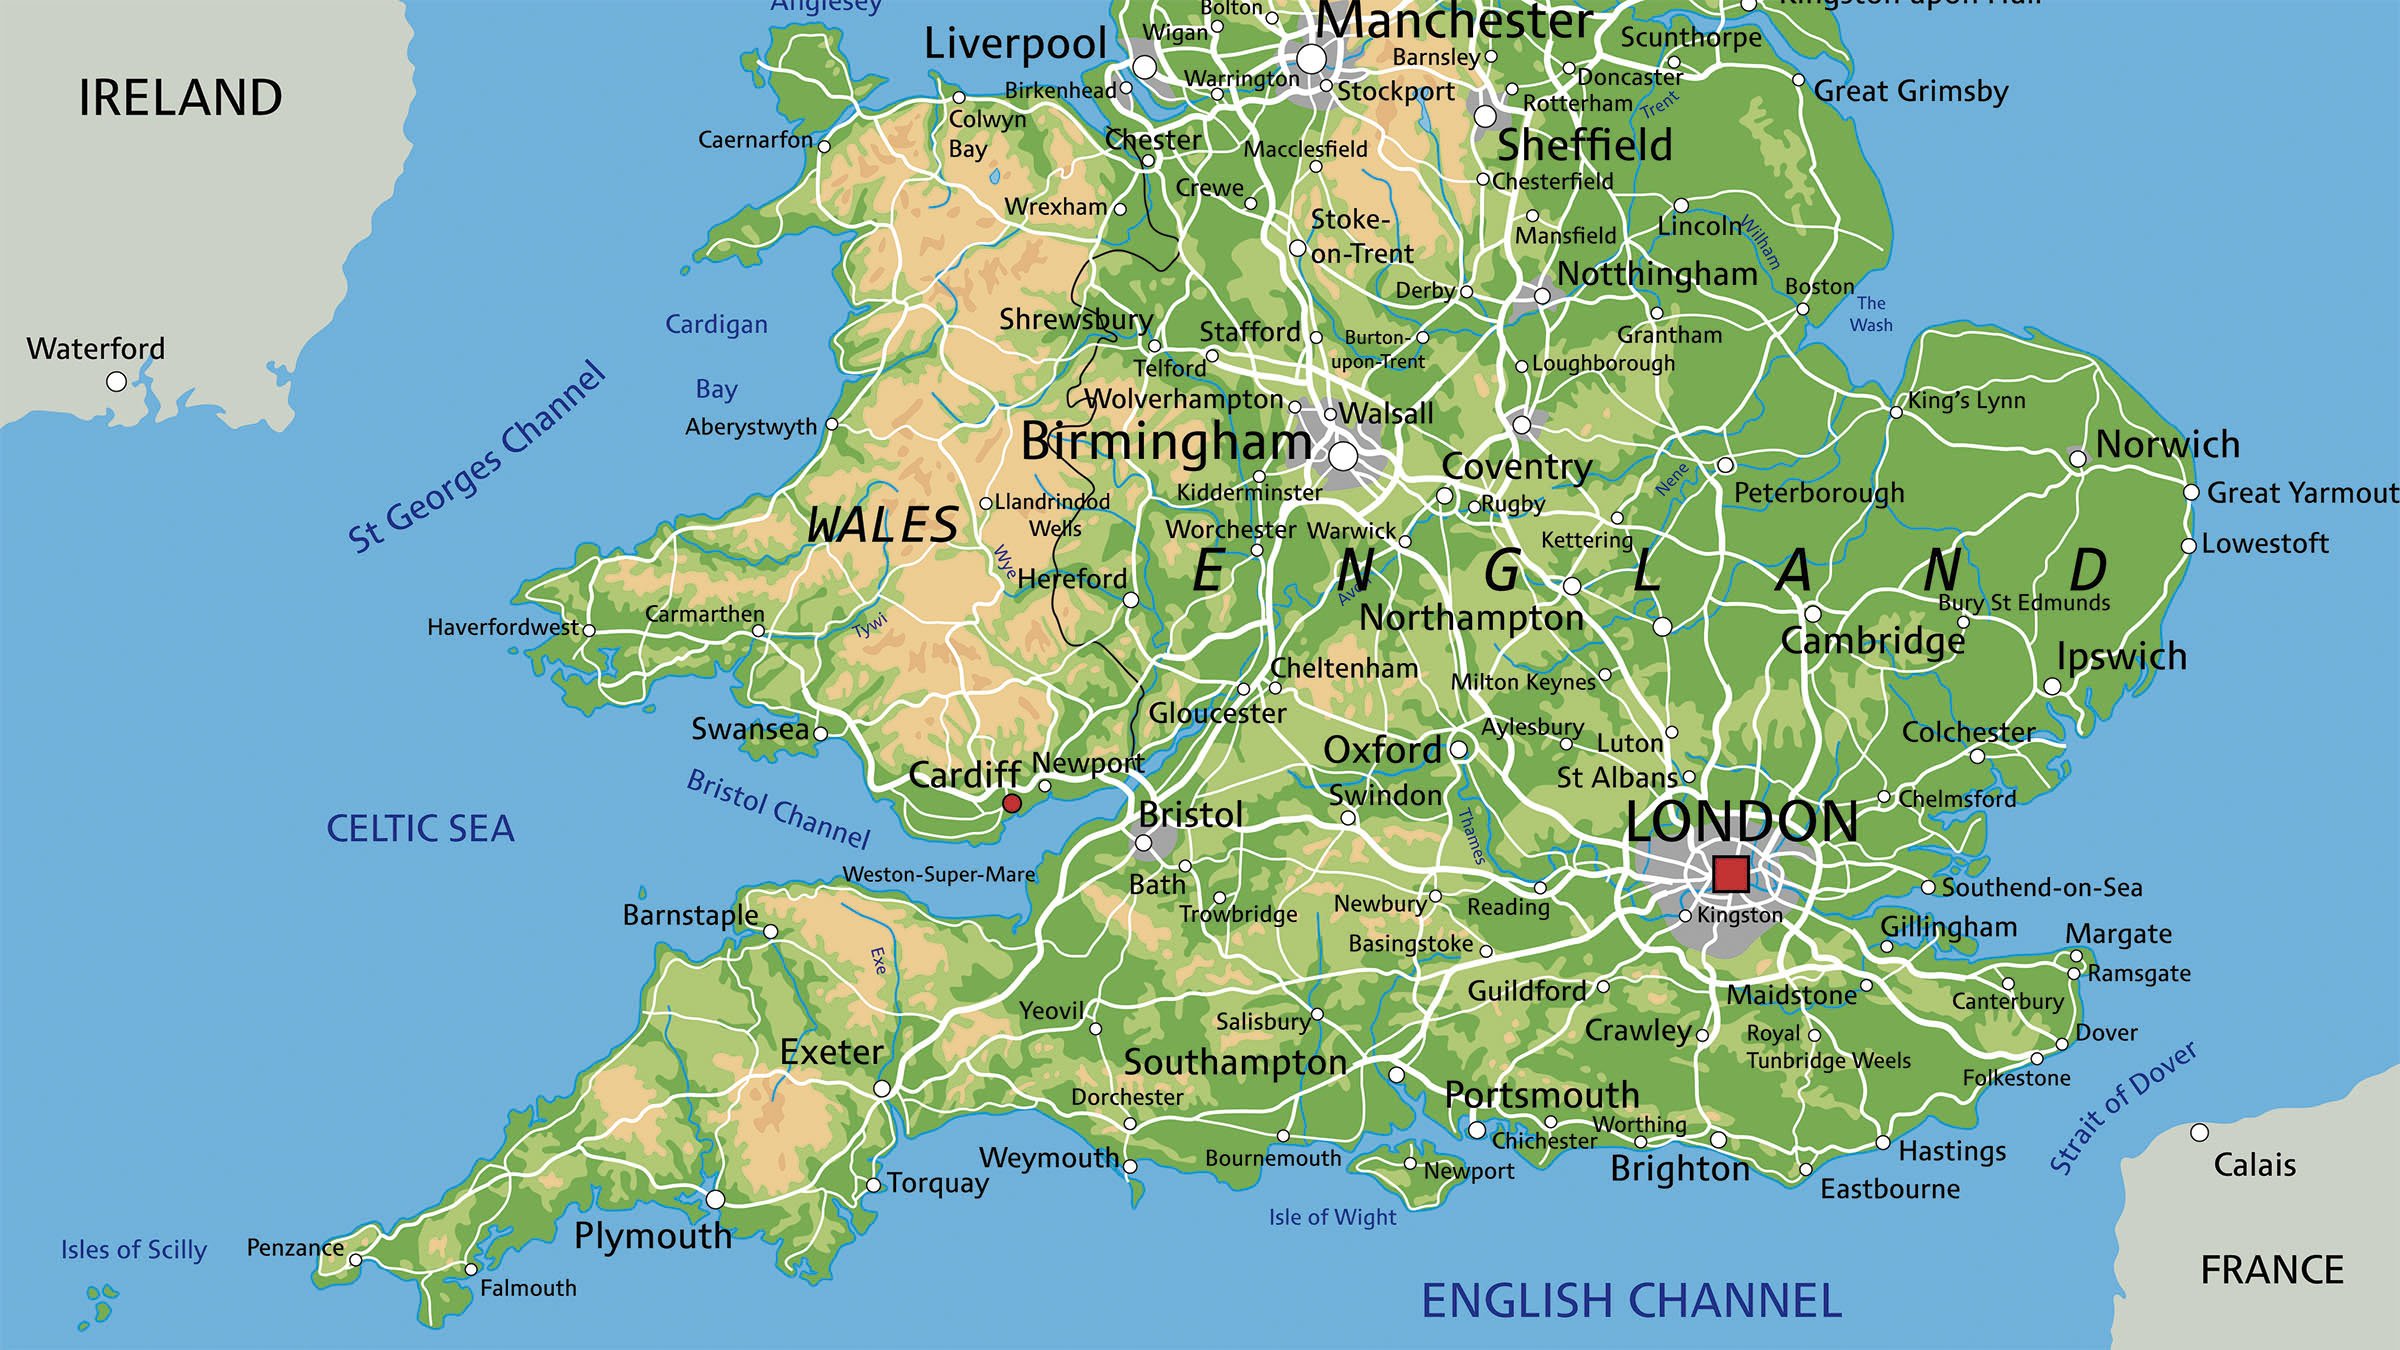 Mapa físico de Inglaterra